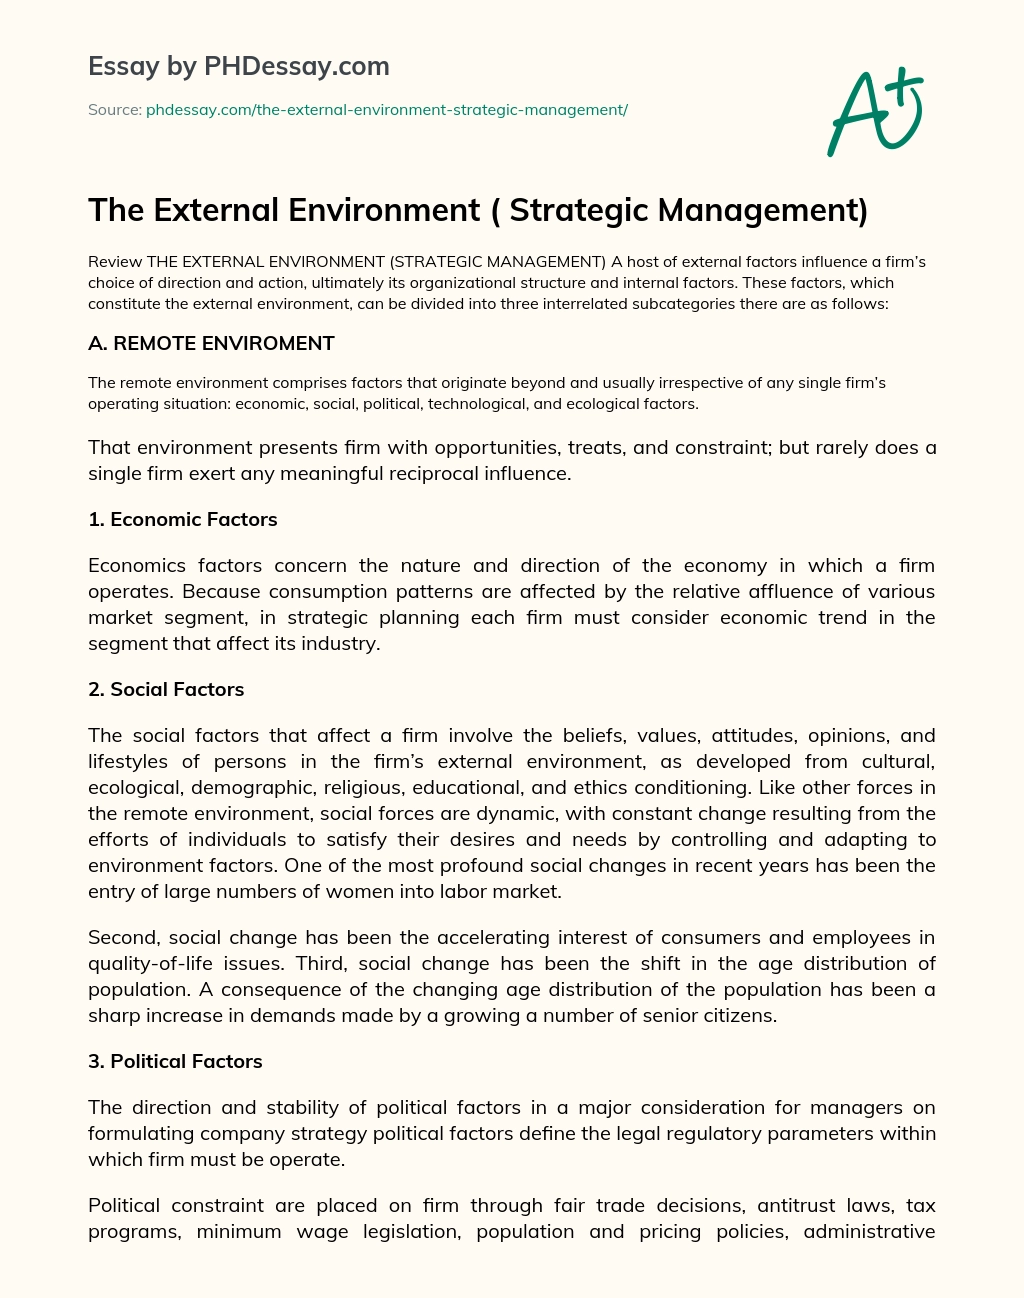 The External Environment ( Strategic Management) essay